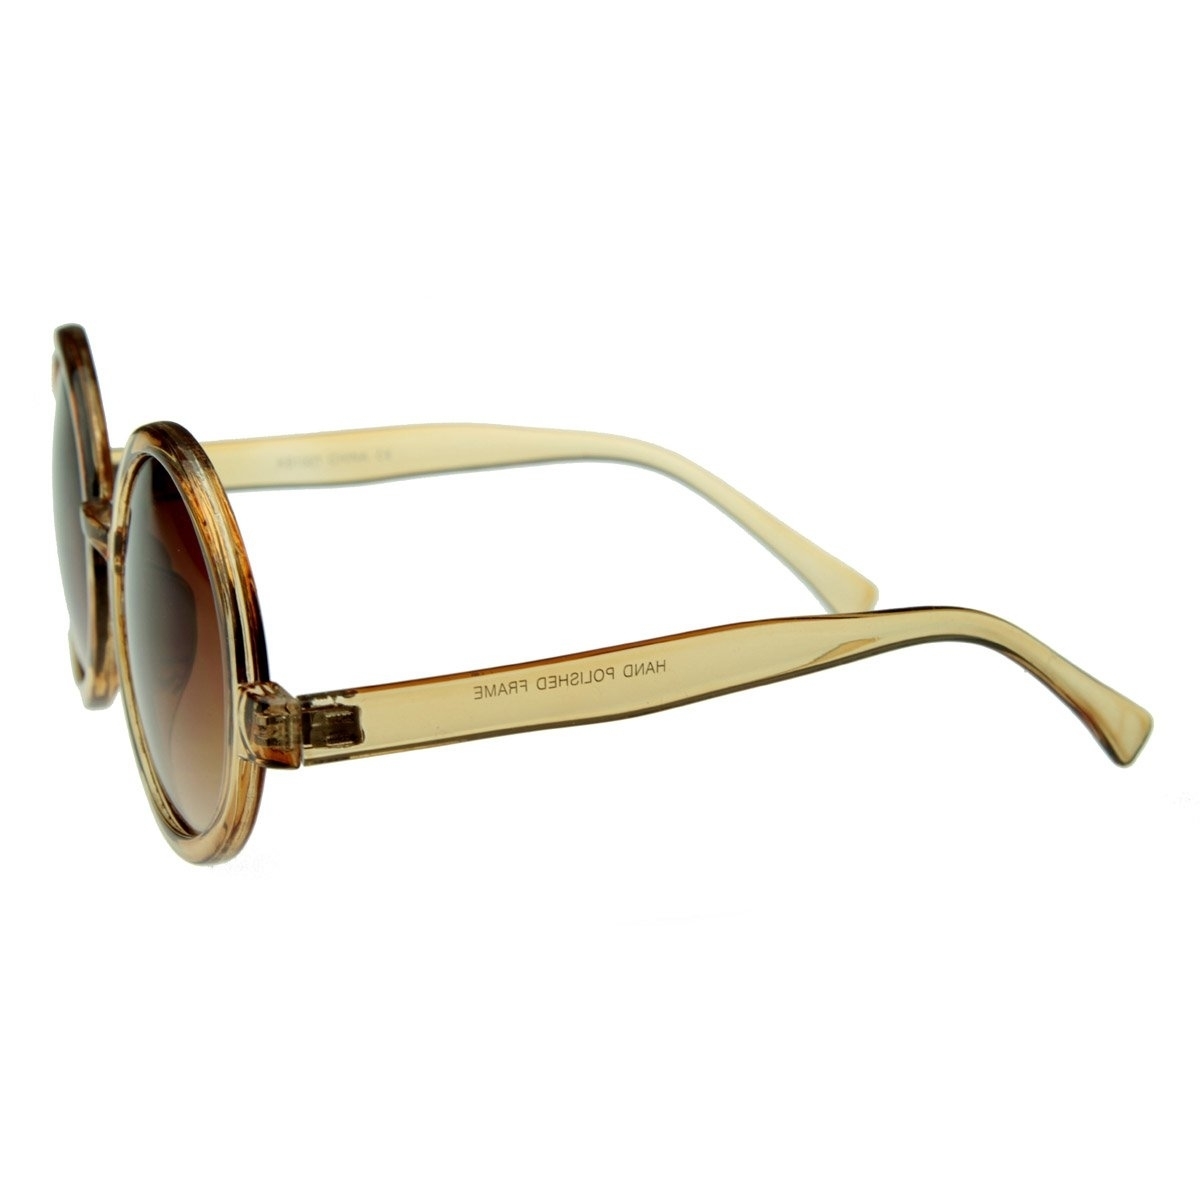 Cute Mod-era Vintage Inspired Round Circle Sunglasses - Peach